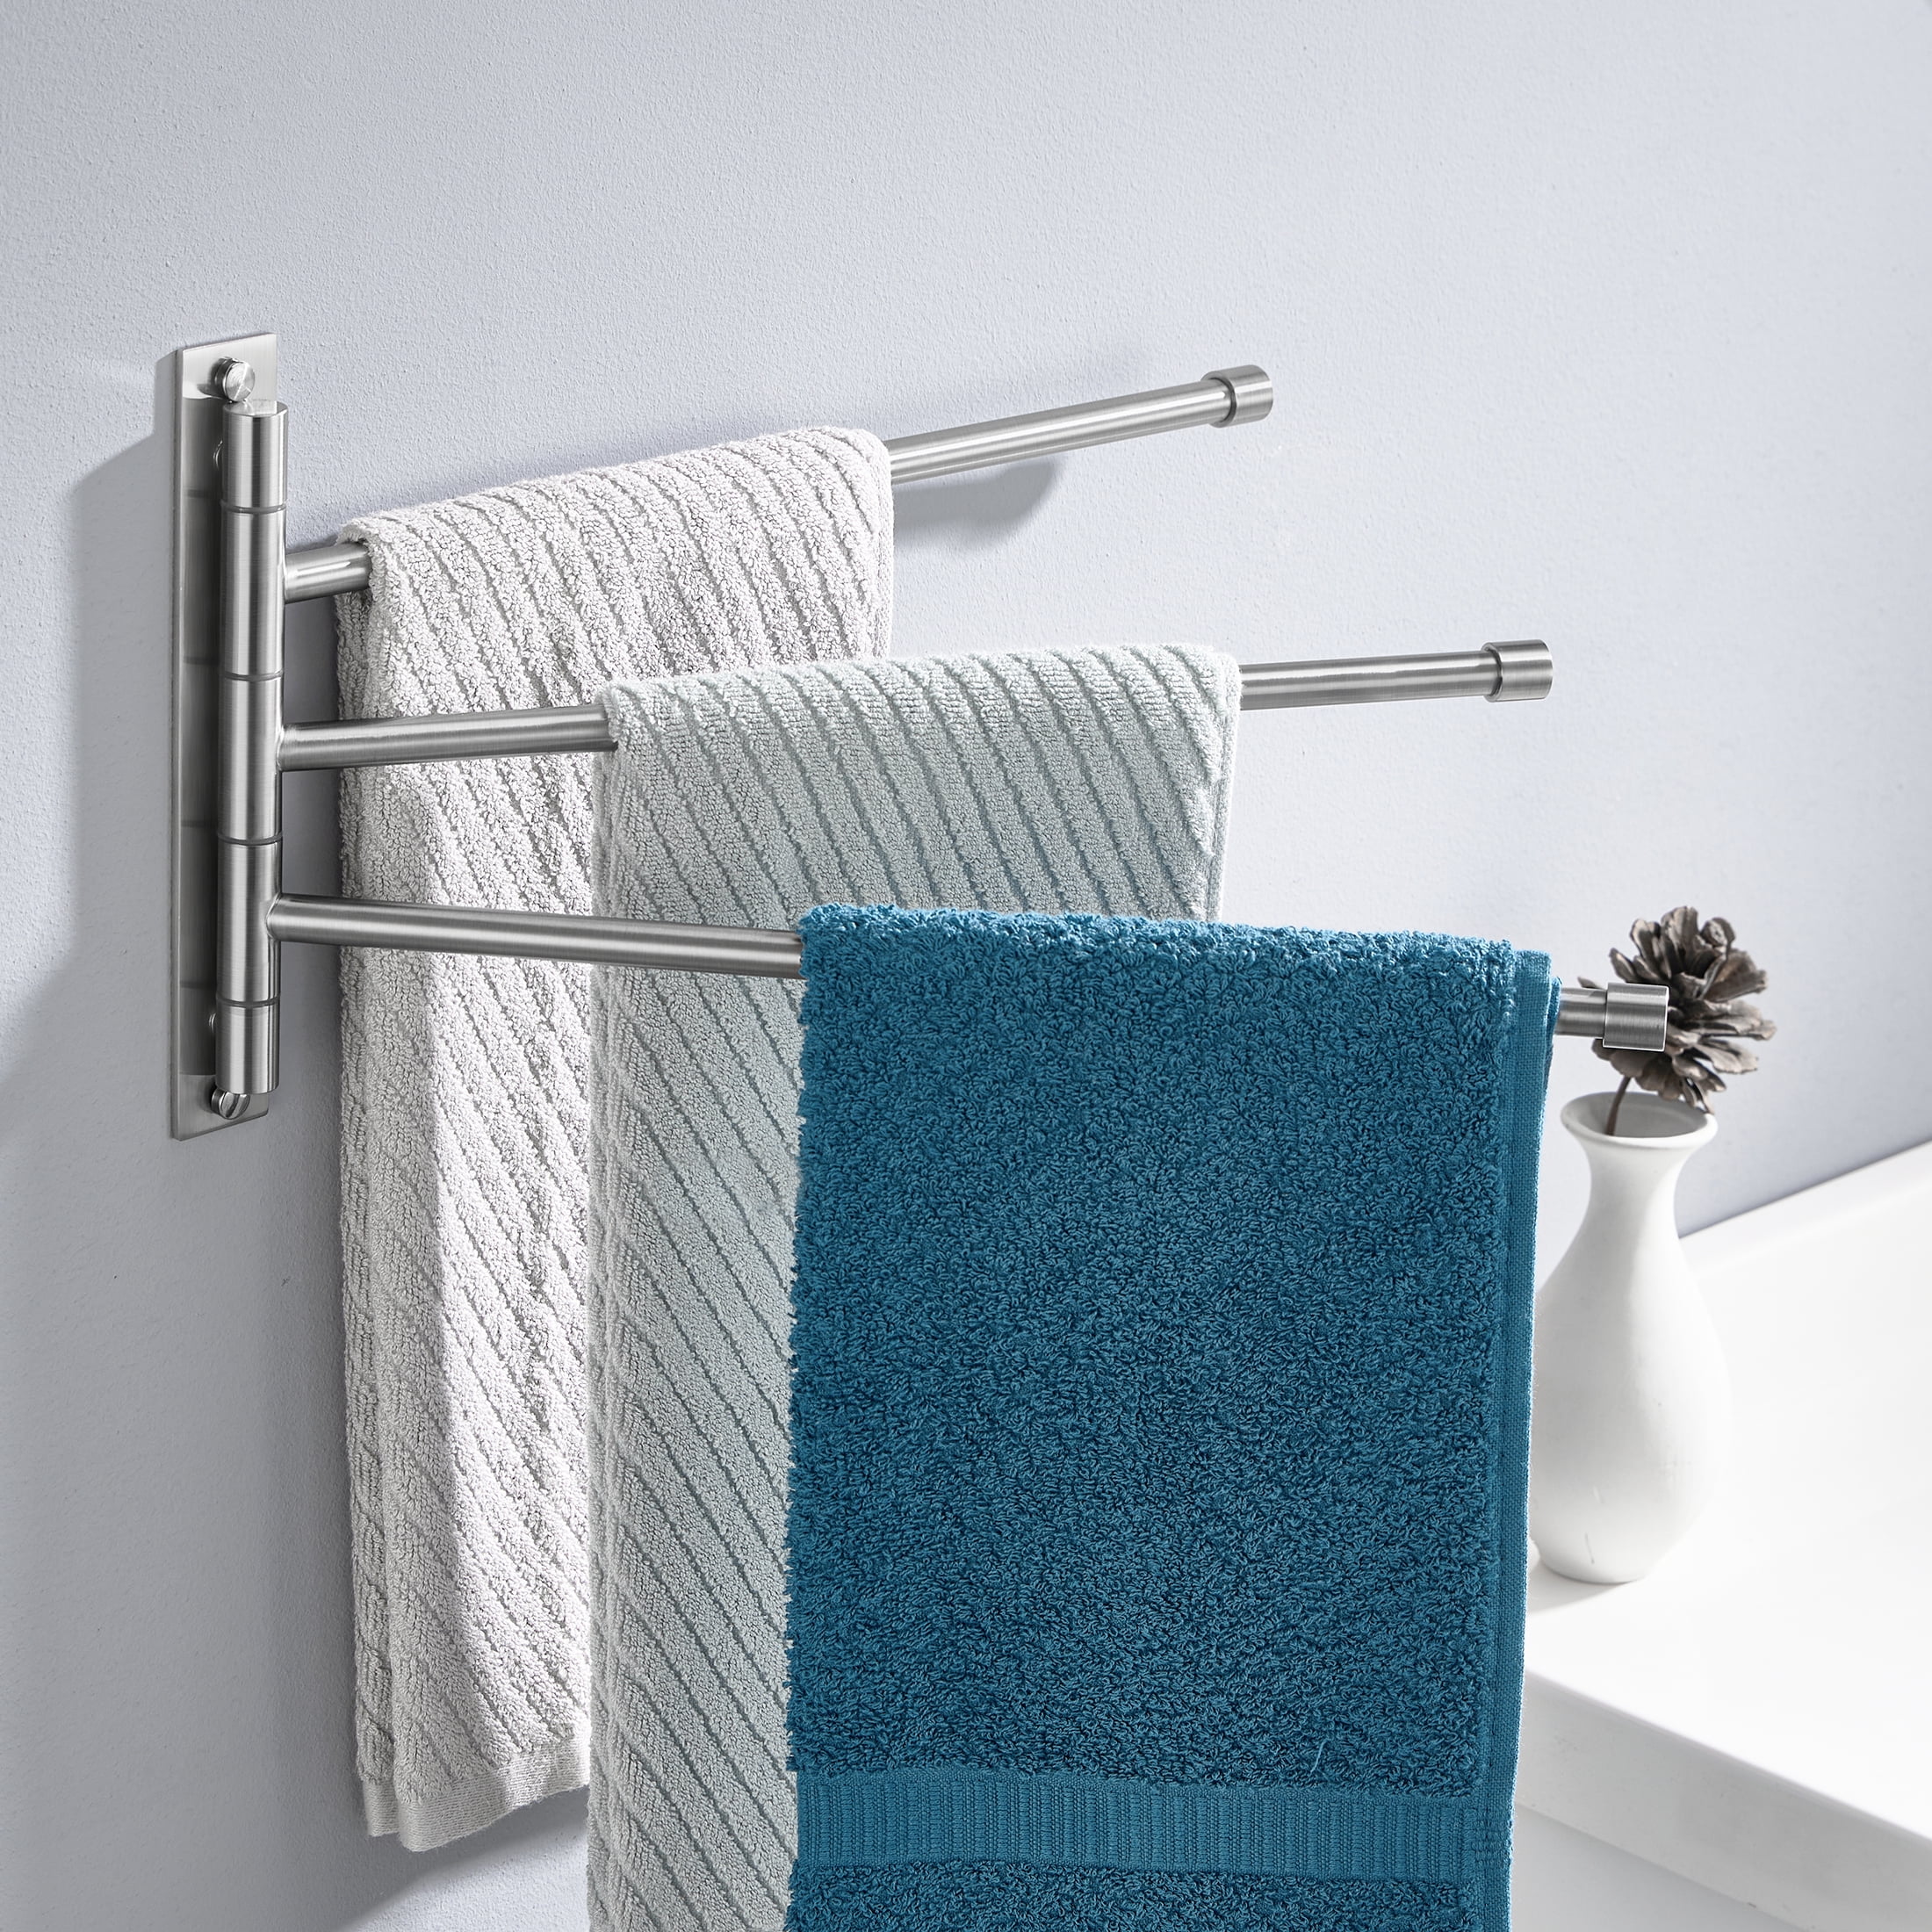 Wenko Towel Bar UN 62 cm Bath Towel Bar Towel Rail Wall Towel Holder 